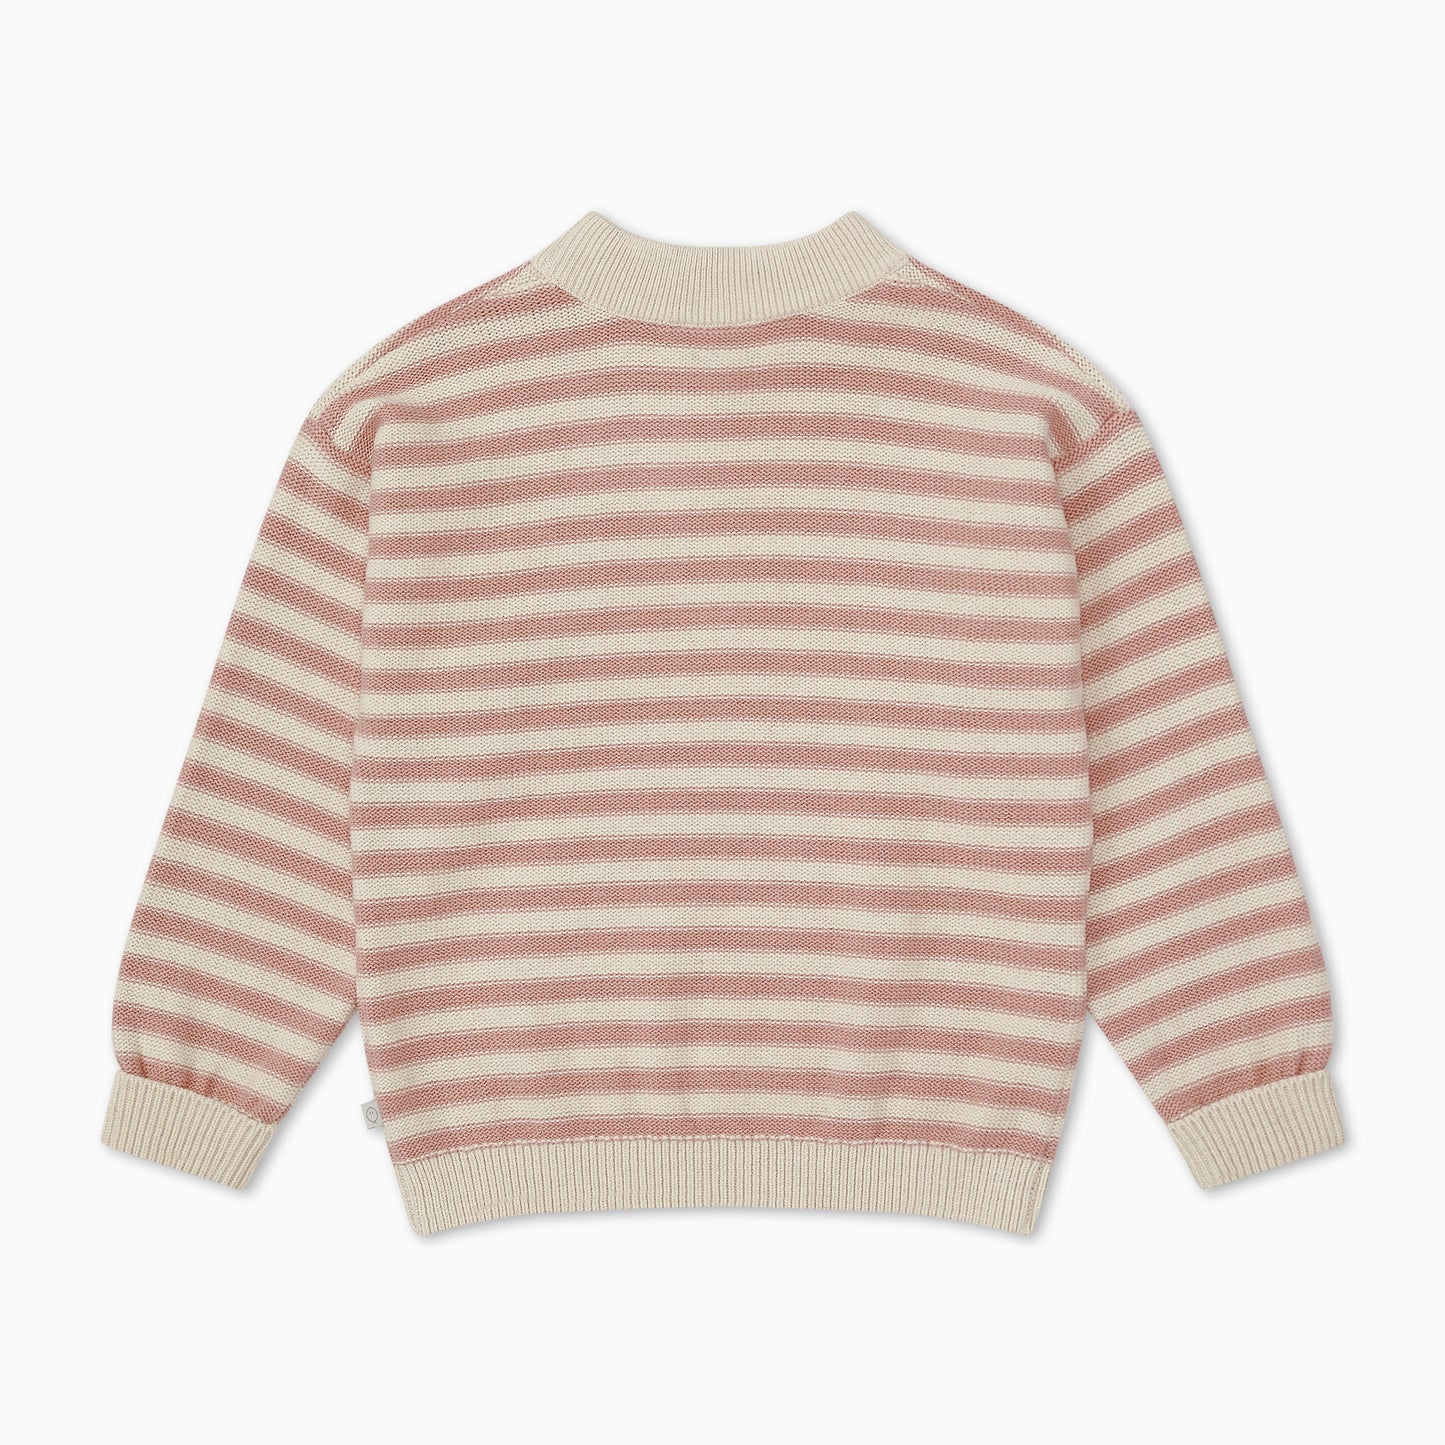 Chunky knit striped jumper - pink